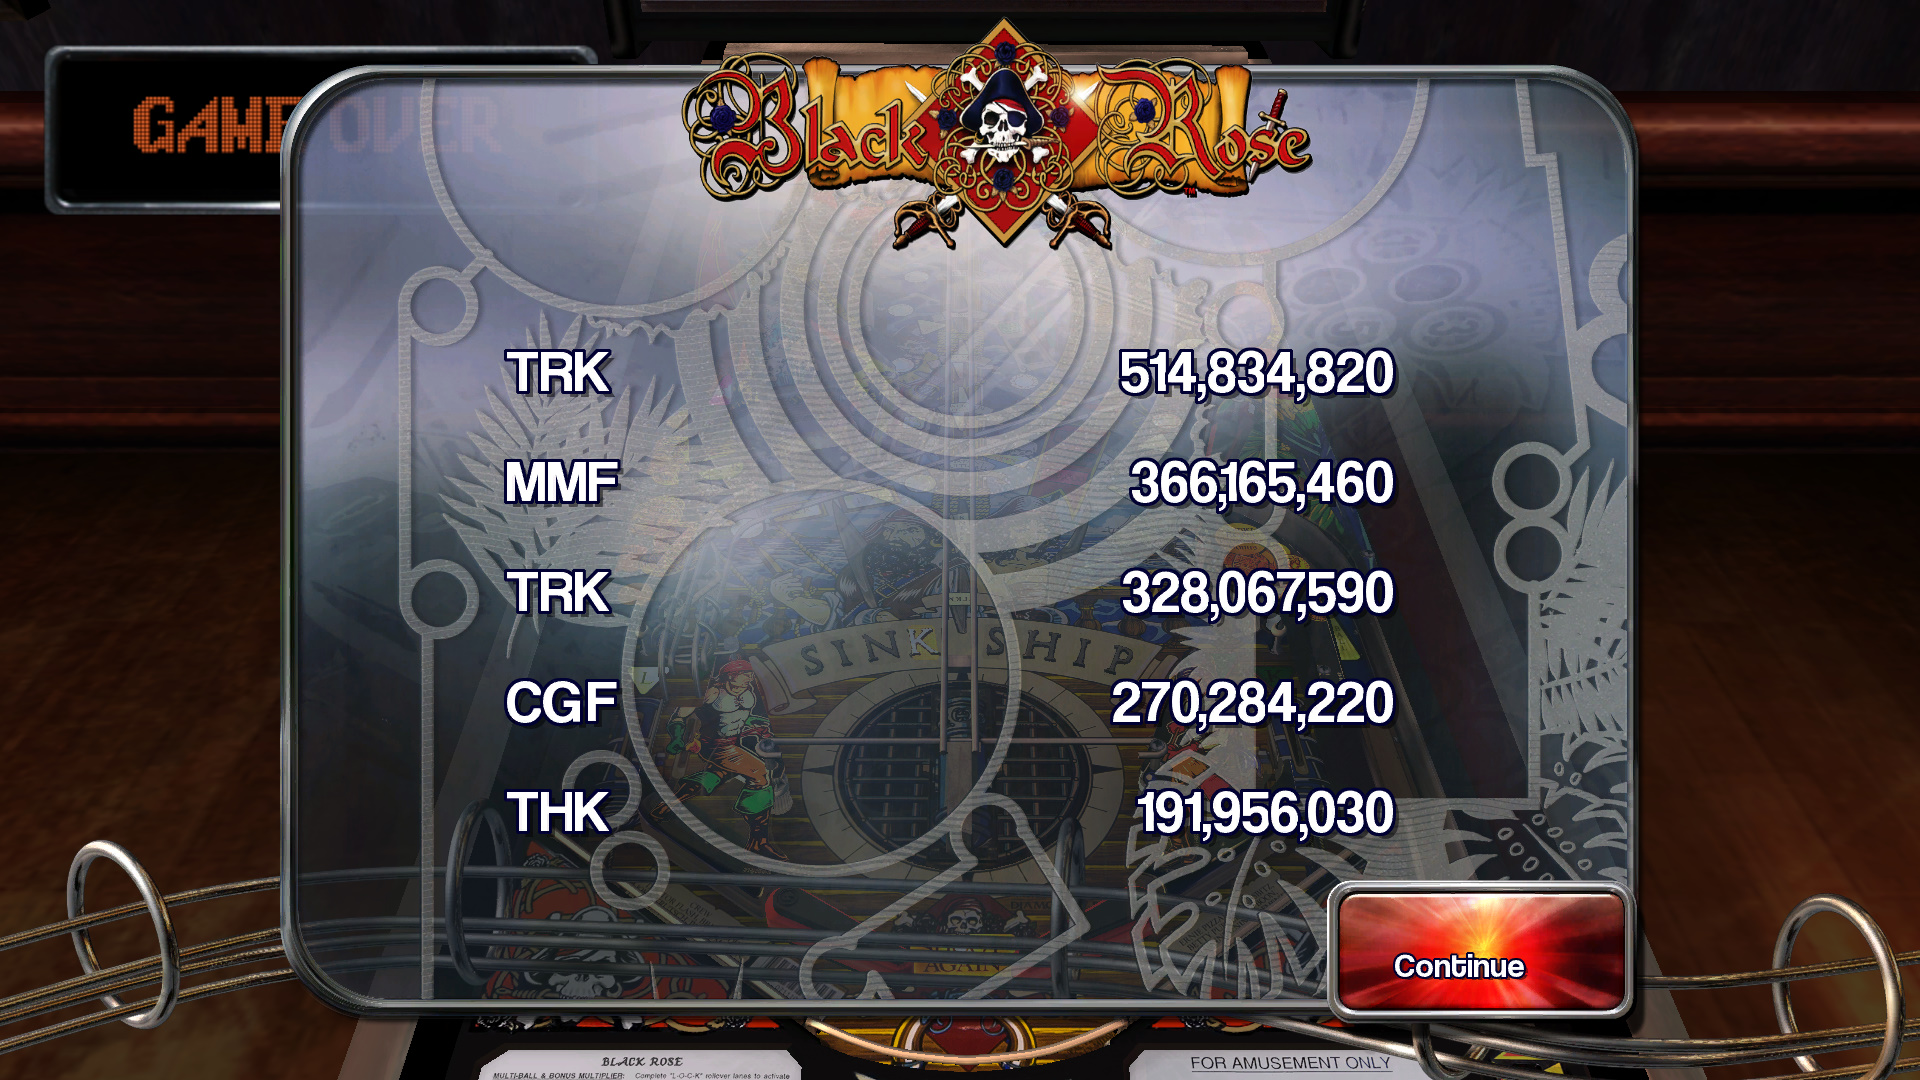 TheTrickster: Pinball Arcade: Black Rose (PC) 514,834,820 points on 2015-11-02 05:47:26